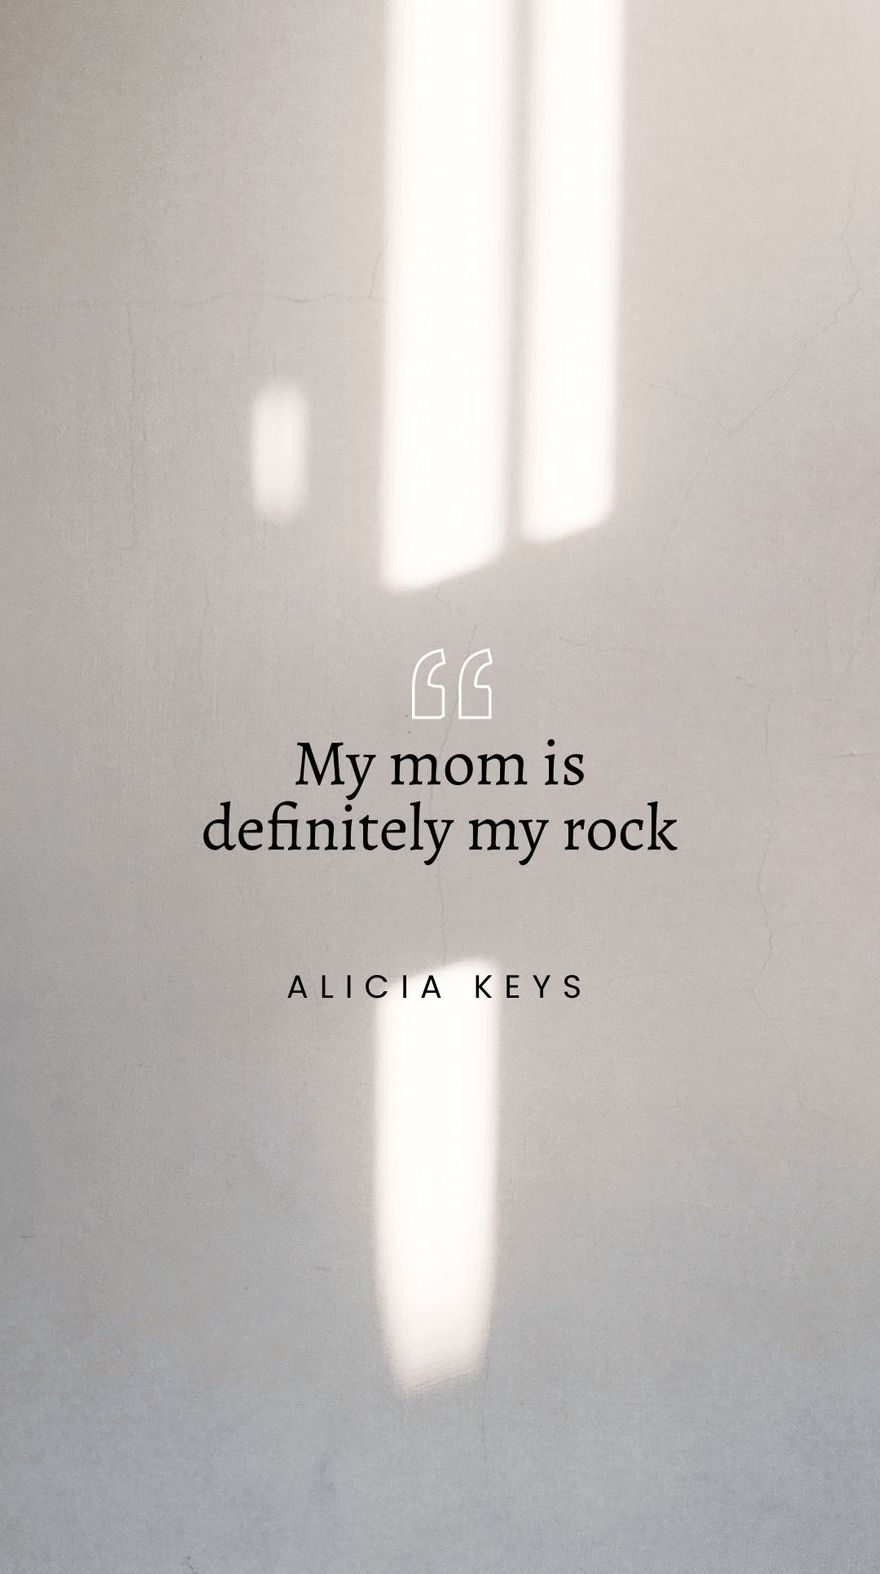 Free Alicia Keys - My mom is definitely my rock.  in JPG